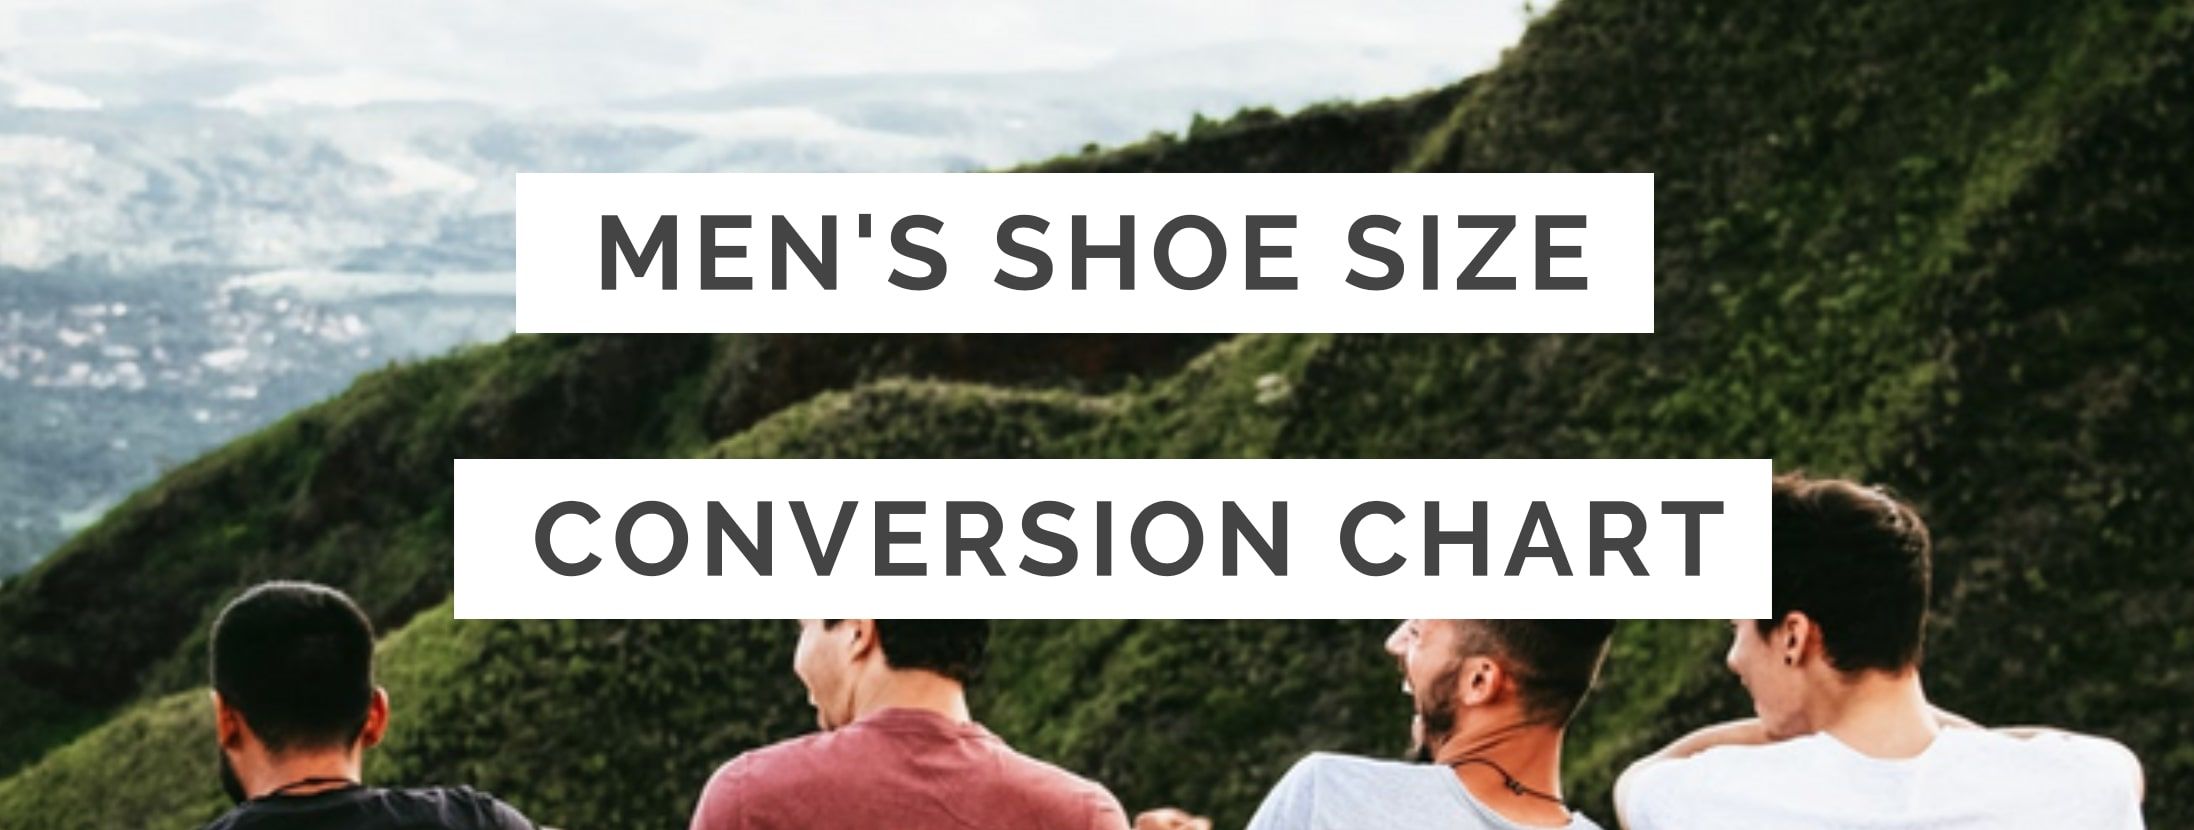 convert european shoe size 46 to us